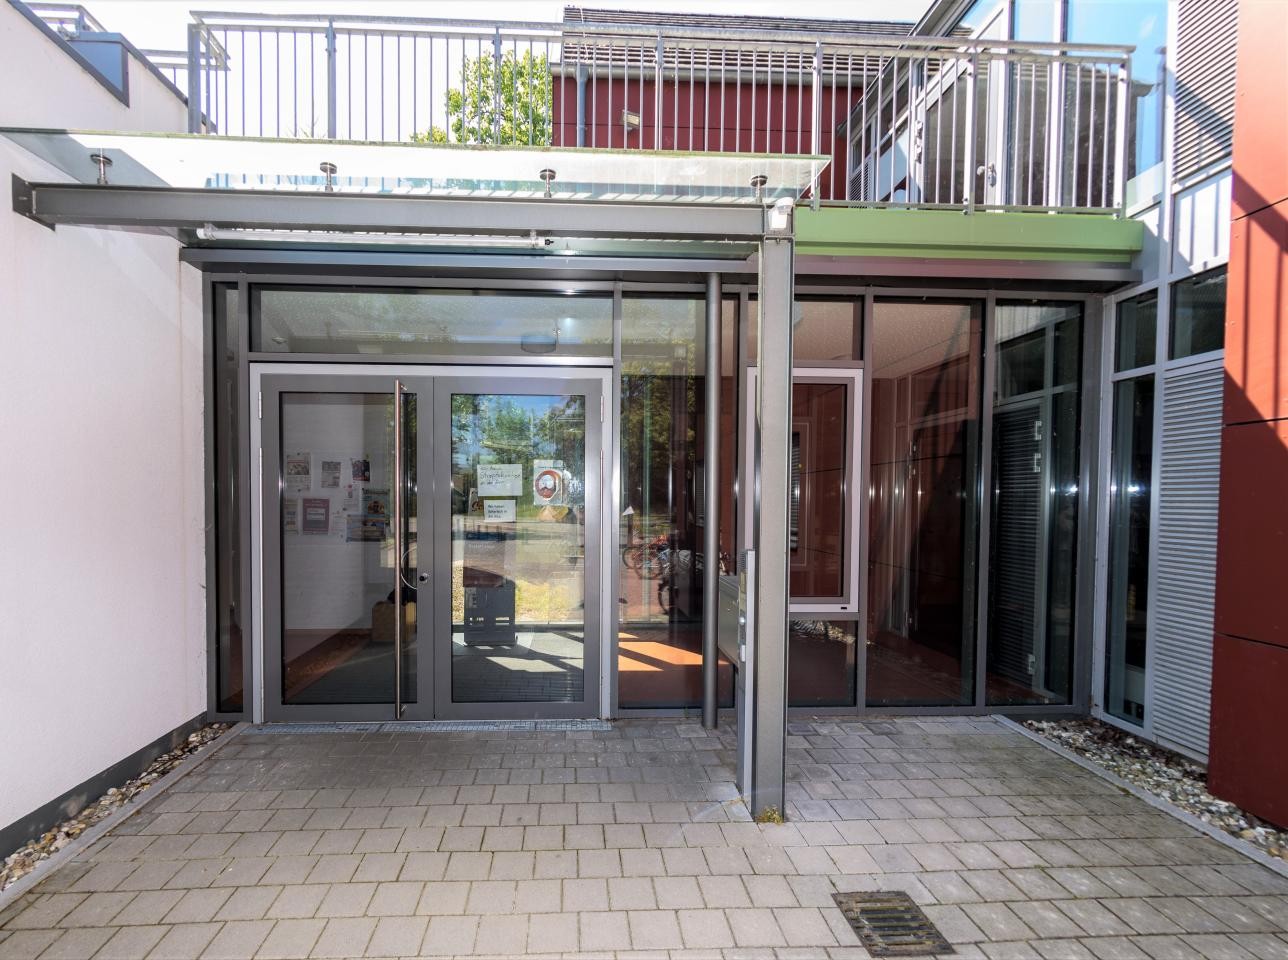 Entrance to Riedwiesen daycare center